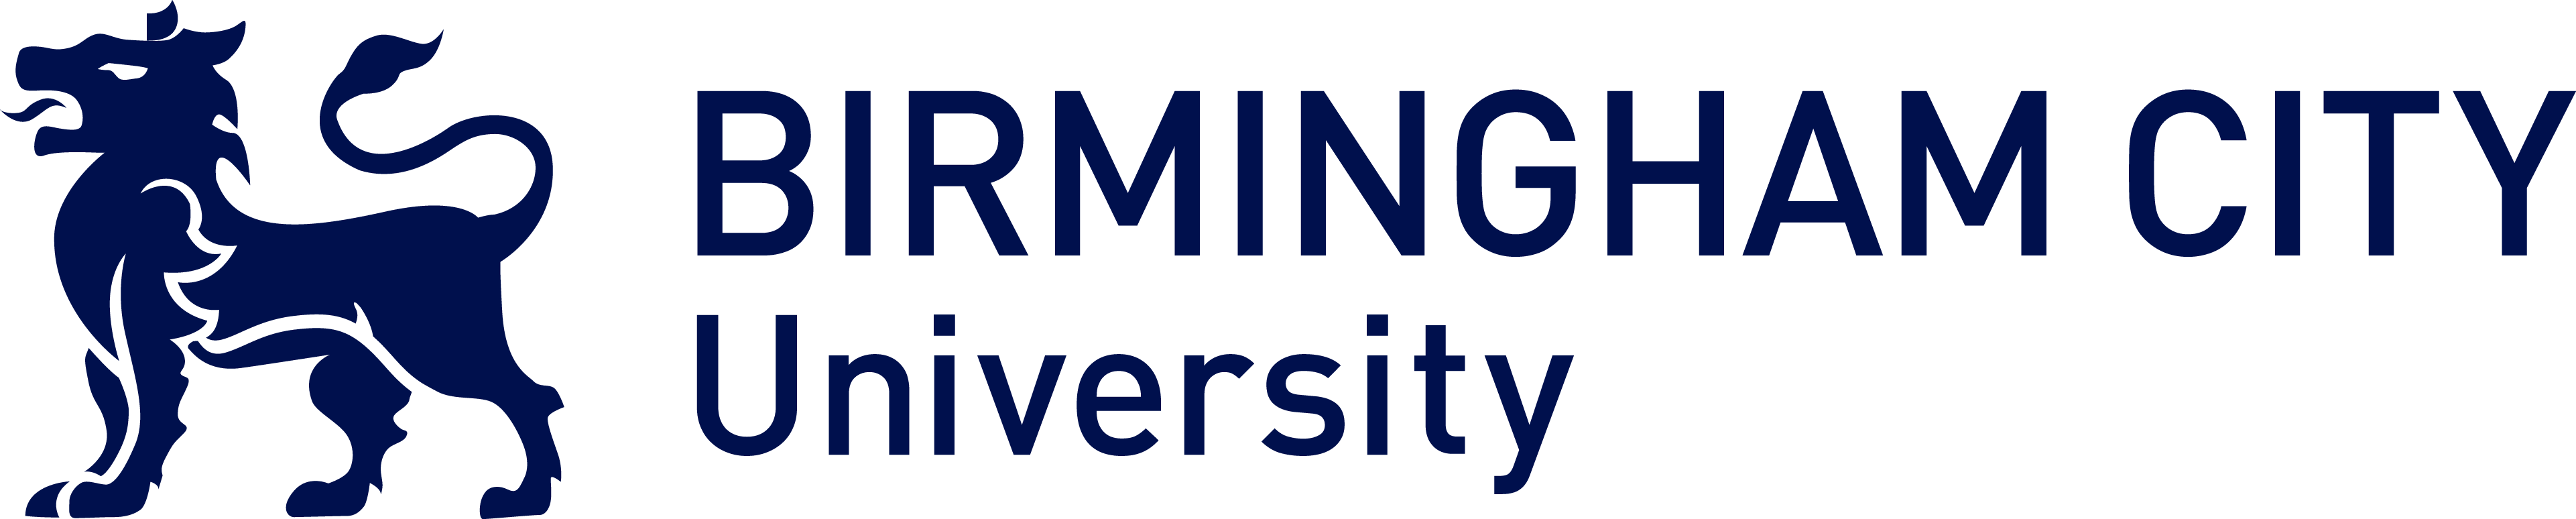 BCU Logo - Birmingham City University - Global Education Ventures